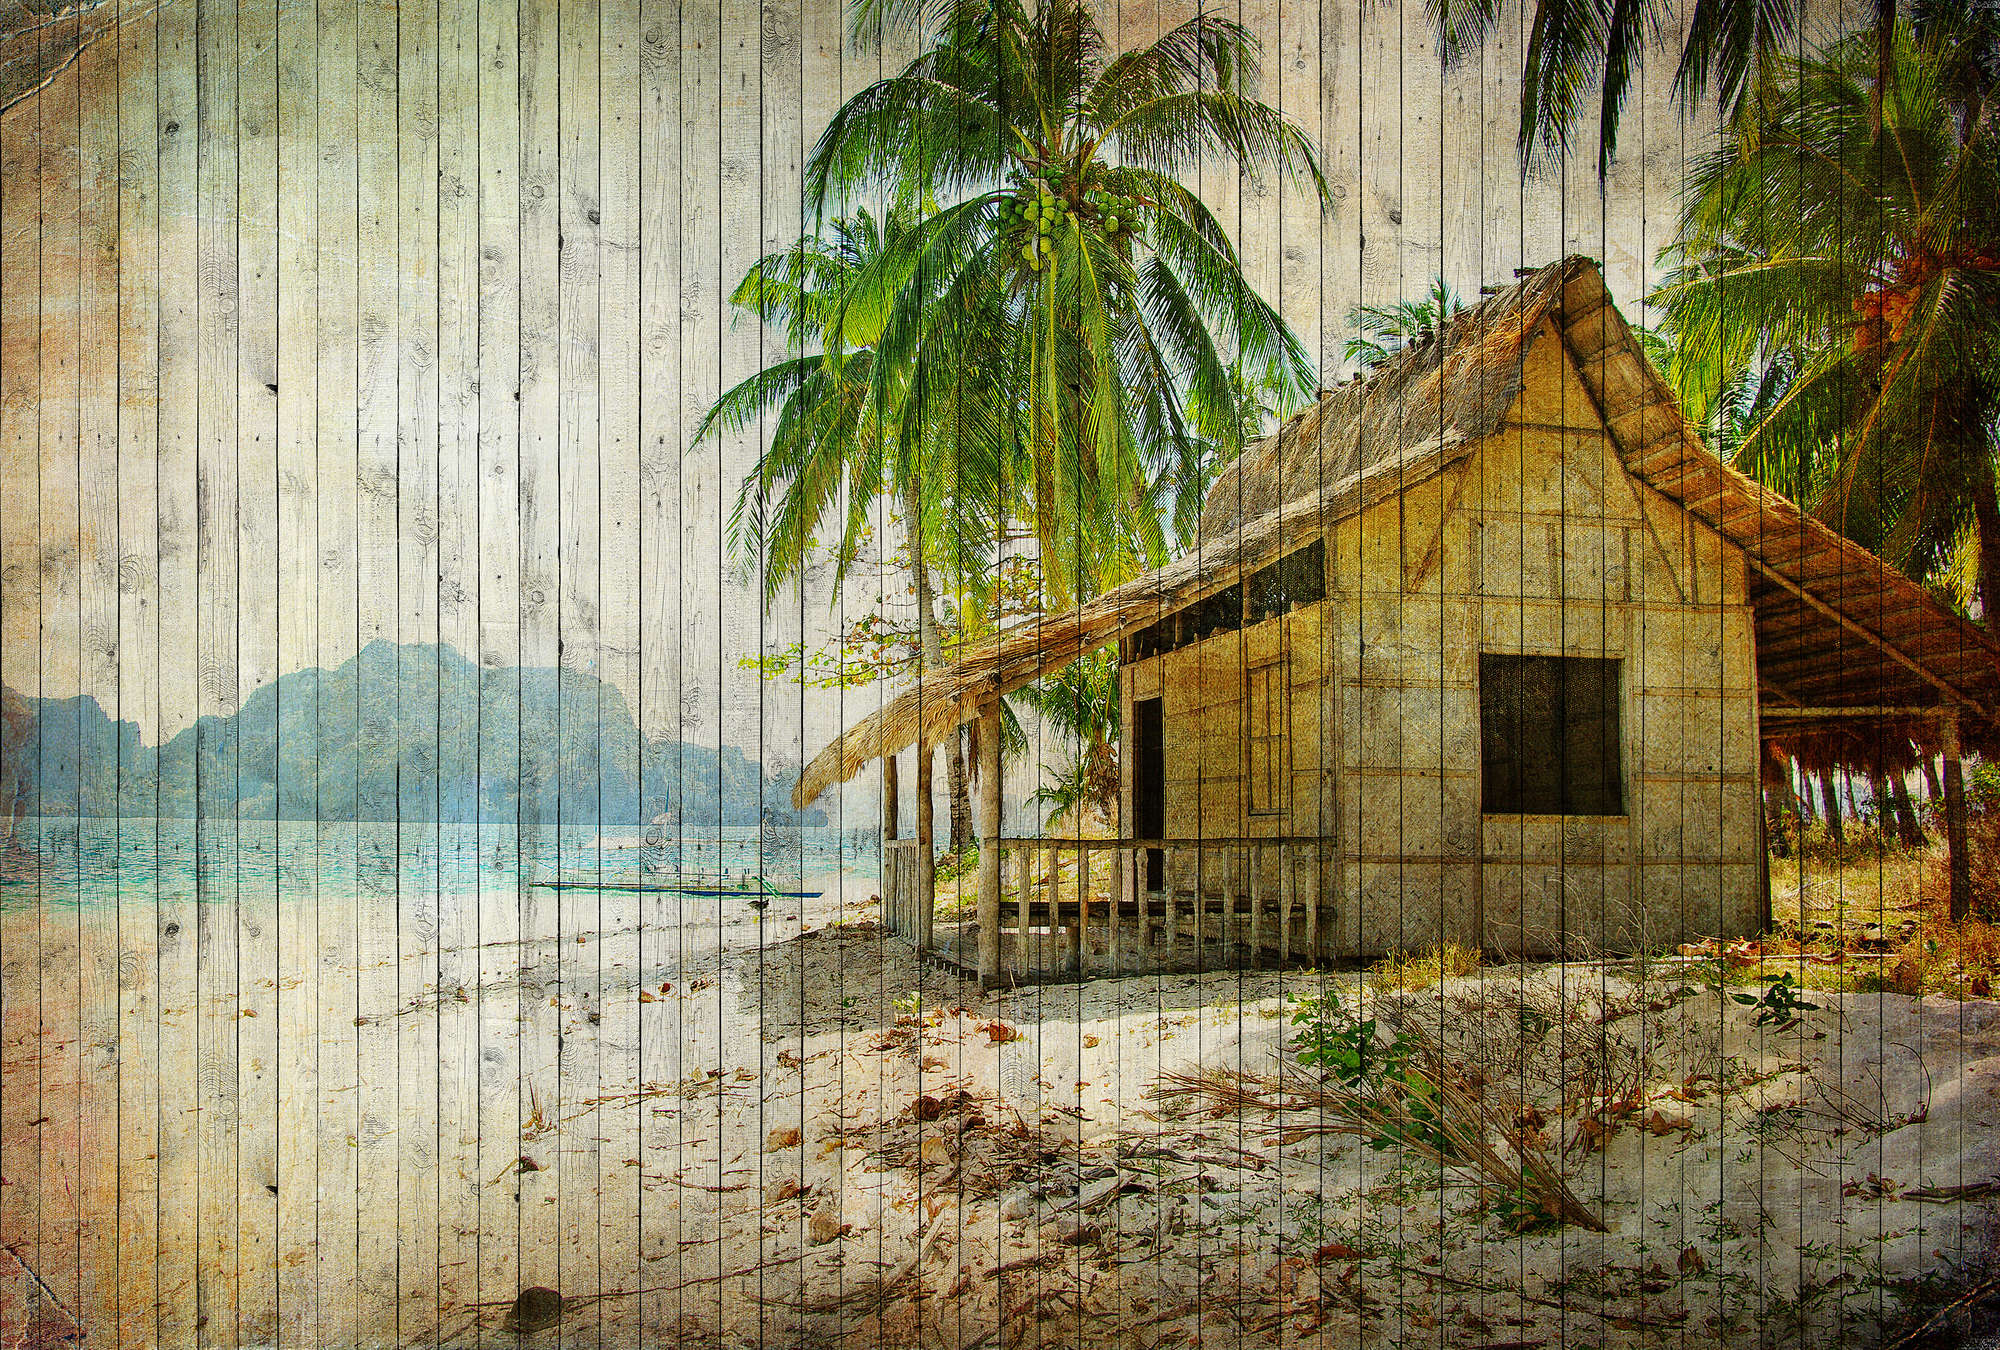             Tahiti 1 - Zuidzee strandbehang met boardoptiek in houten panelen - Beige, Blauw | Matte gladde vlieseline
        